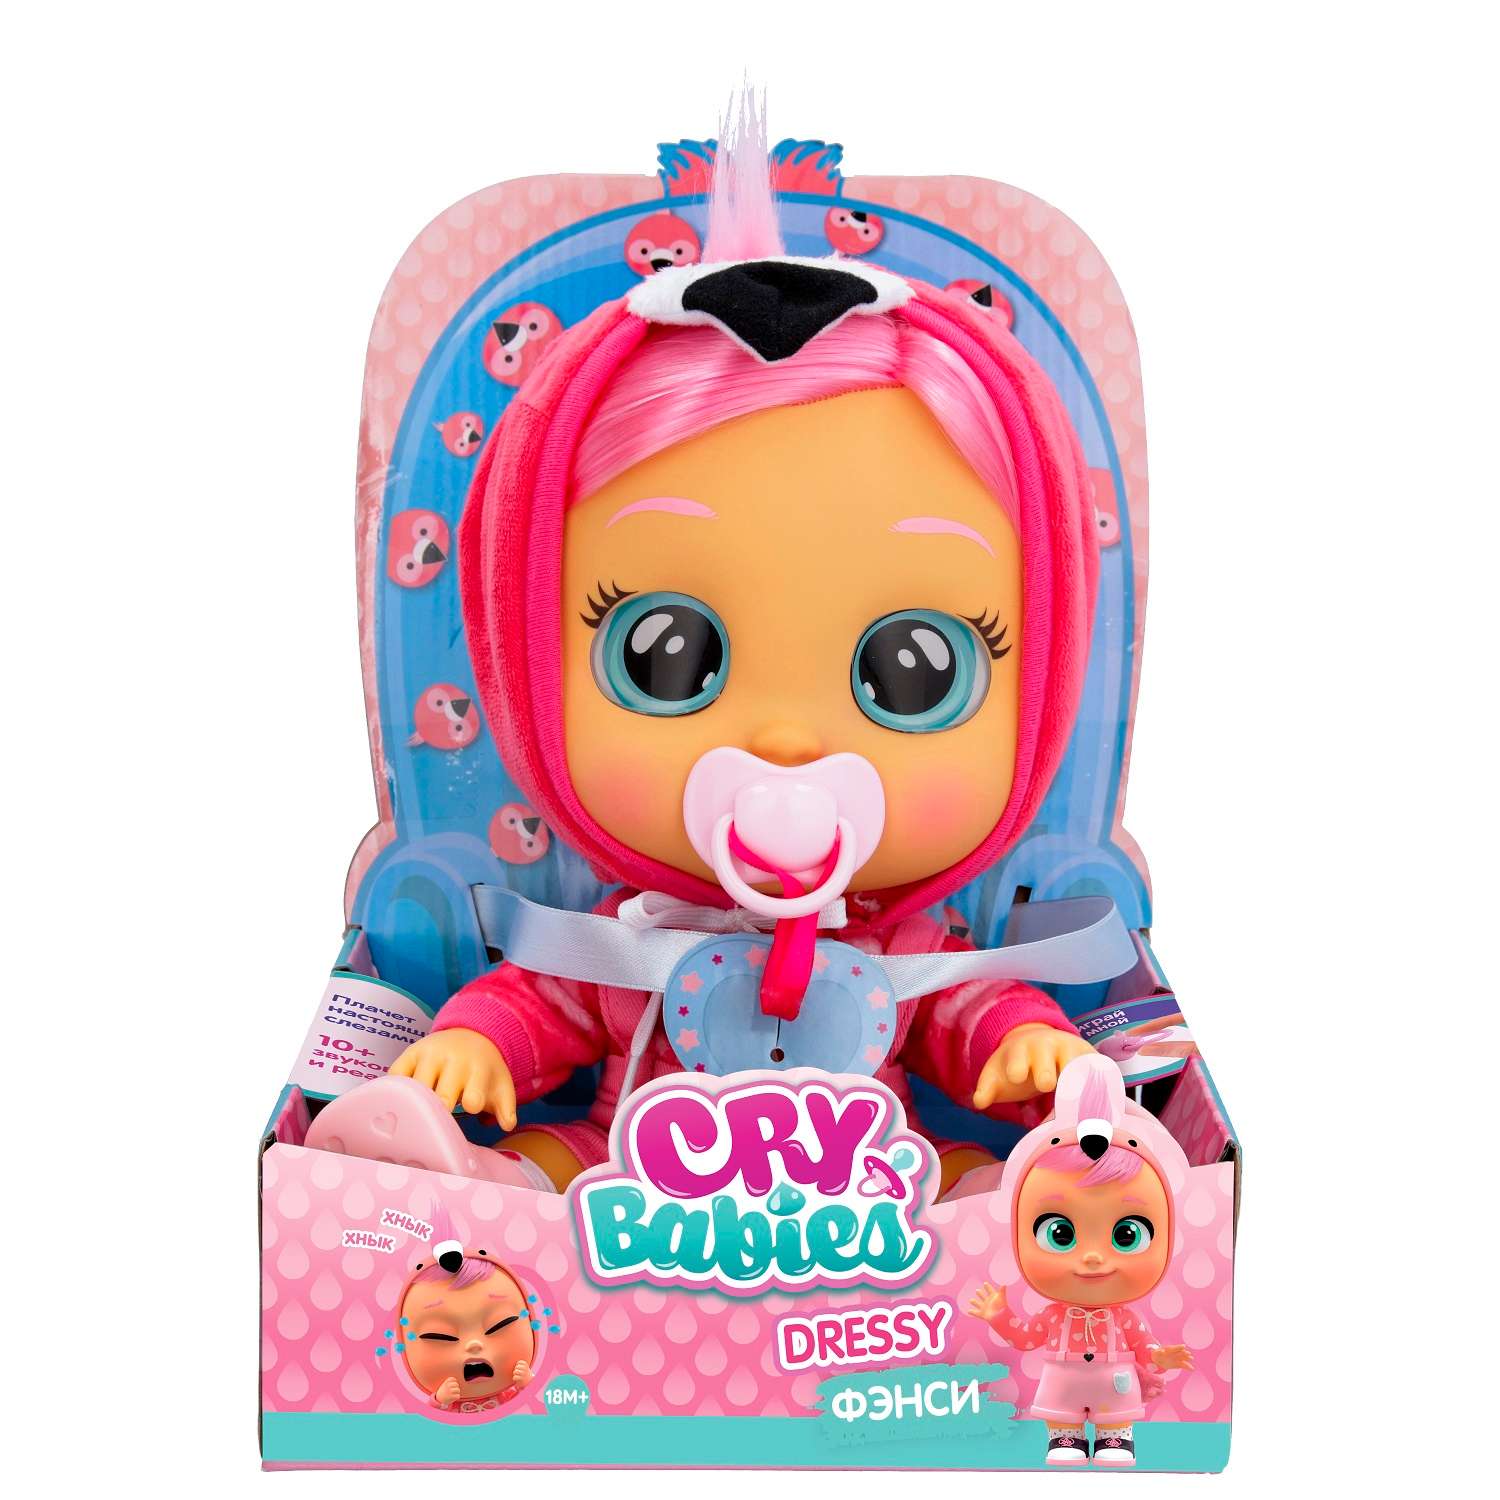 Кукла Cry Babies Dressy Фэнси интерактивная 40886 40886 - фото 2